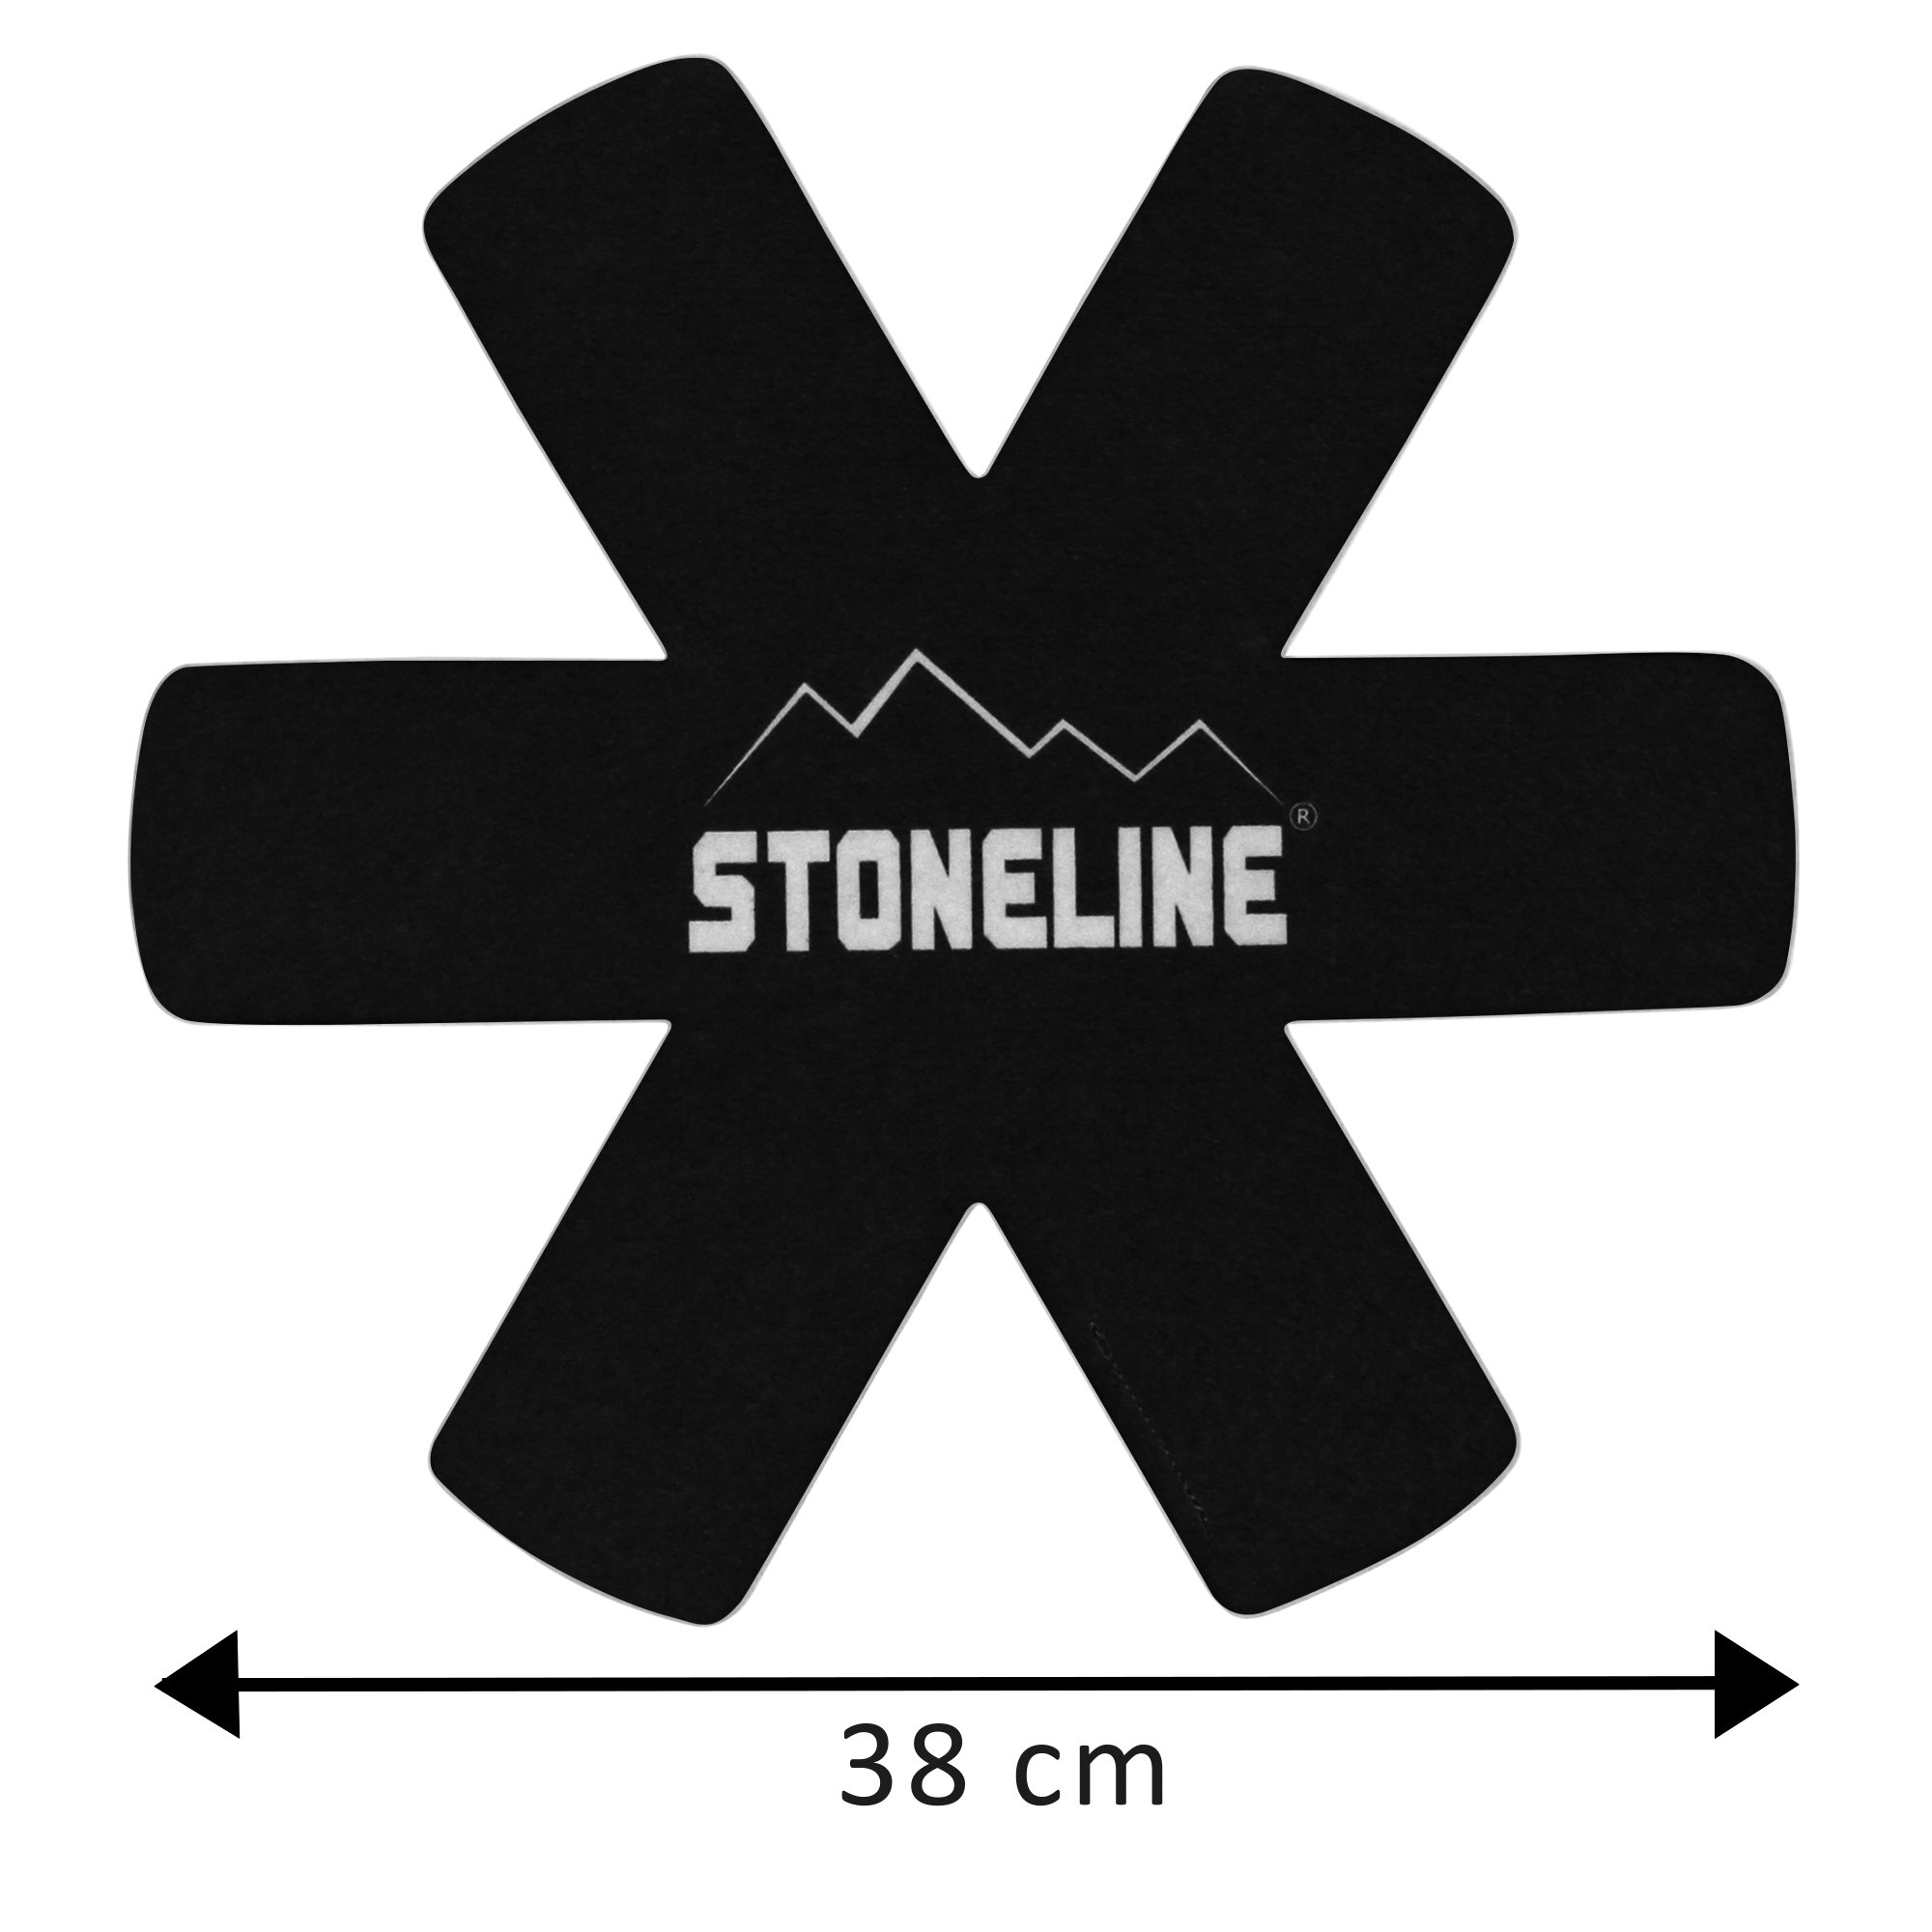 STONELINE® 2 pc Pot & Pan Protector Set 38 cm, black | Coaster Stacking Protectors